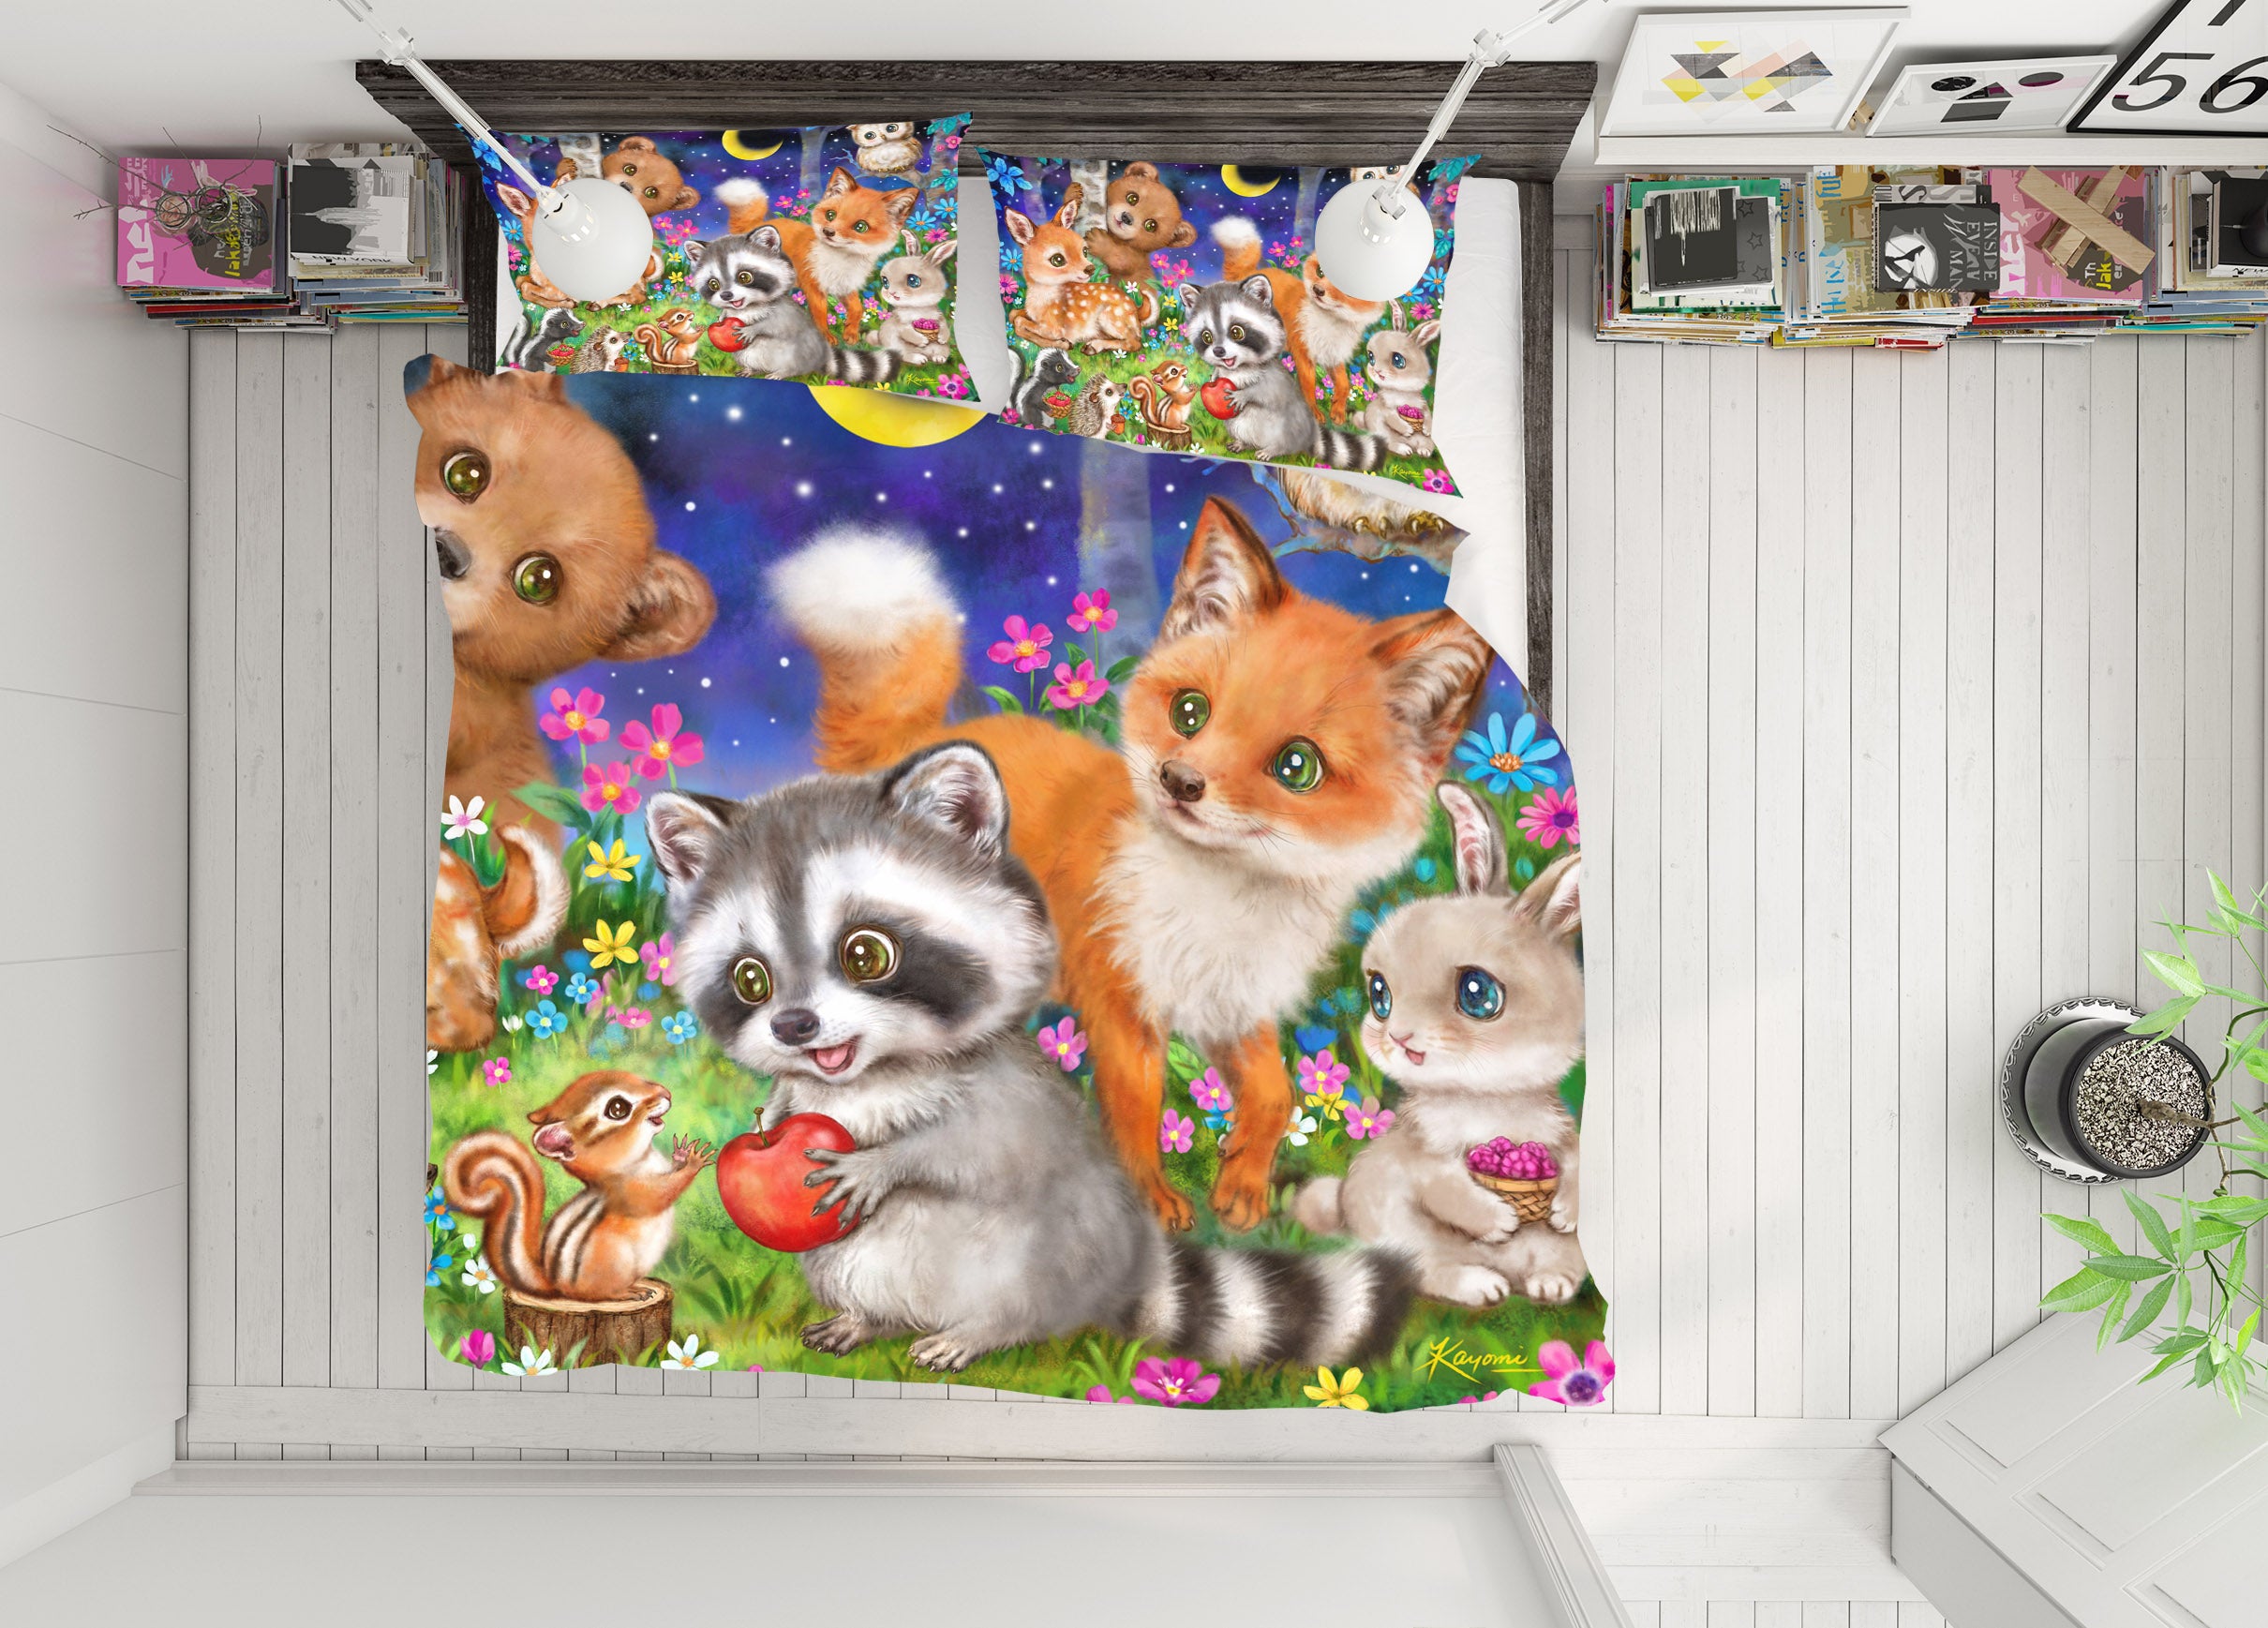 3D Civet Cat Squirrel 5902 Kayomi Harai Bedding Bed Pillowcases Quilt Cover Duvet Cover